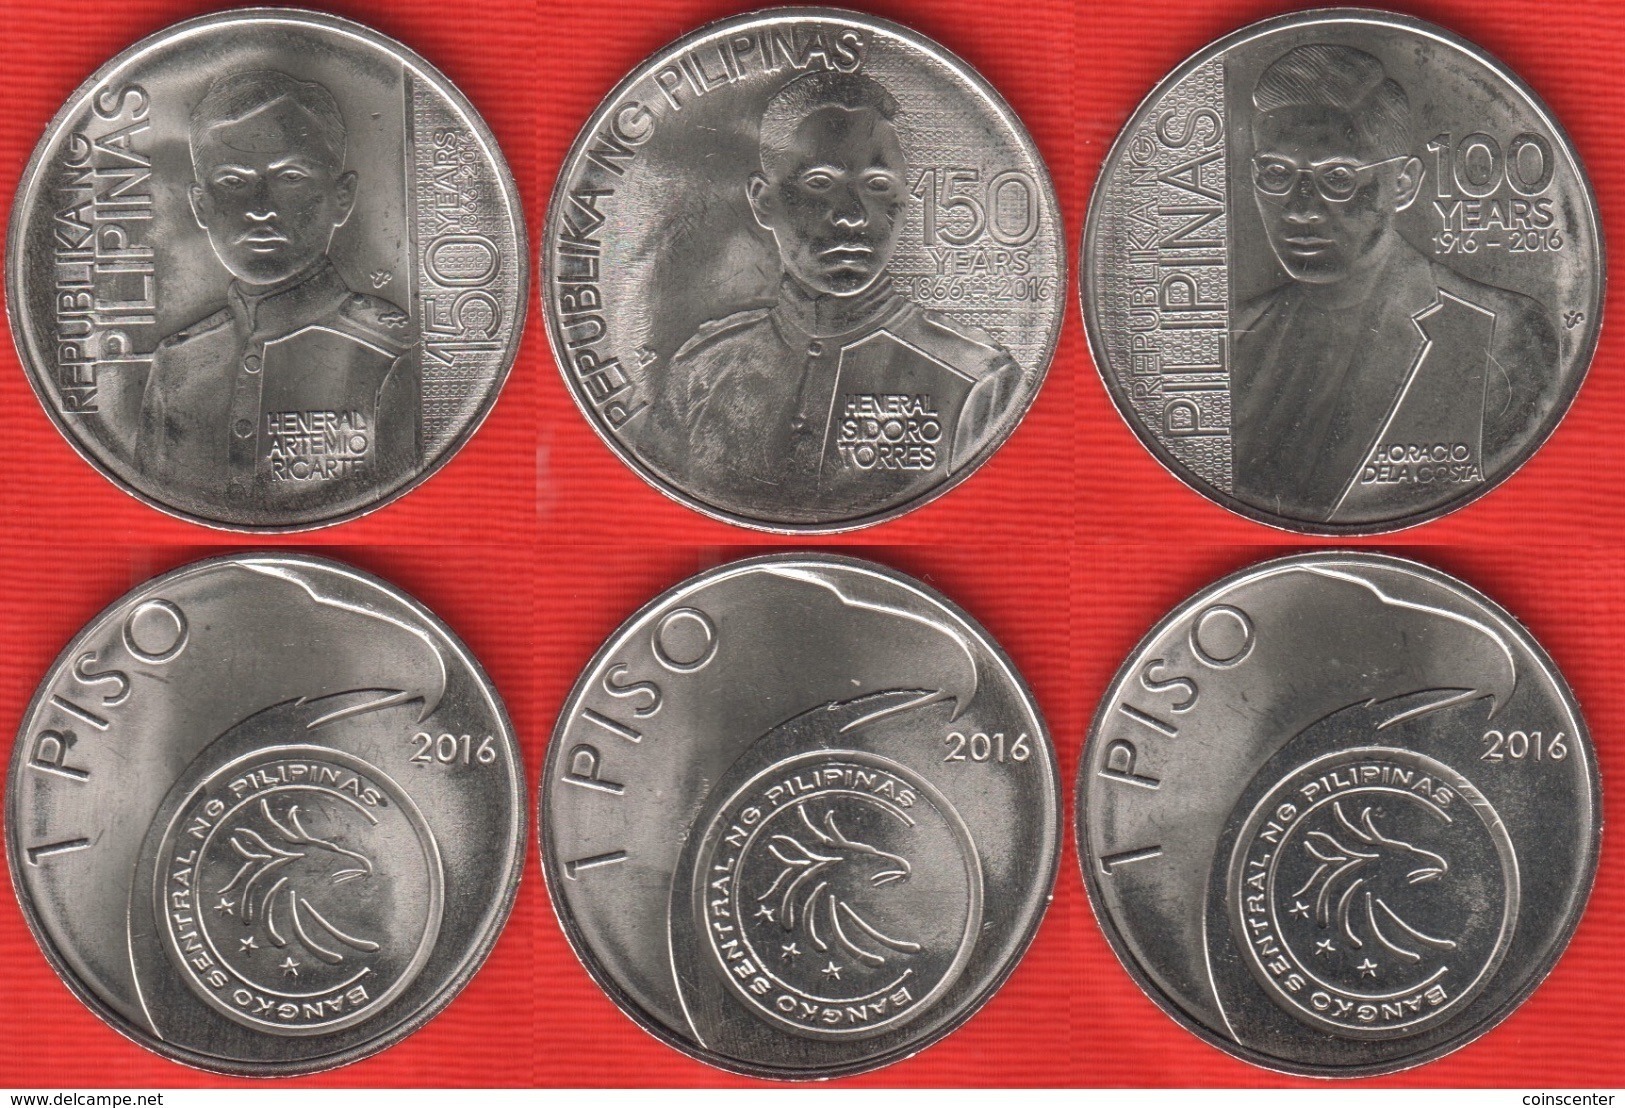 Philippines Set Of 3 Coins: 1 Piso 2016 "Ricarte, Costa, Torres" UNC - Philippinen